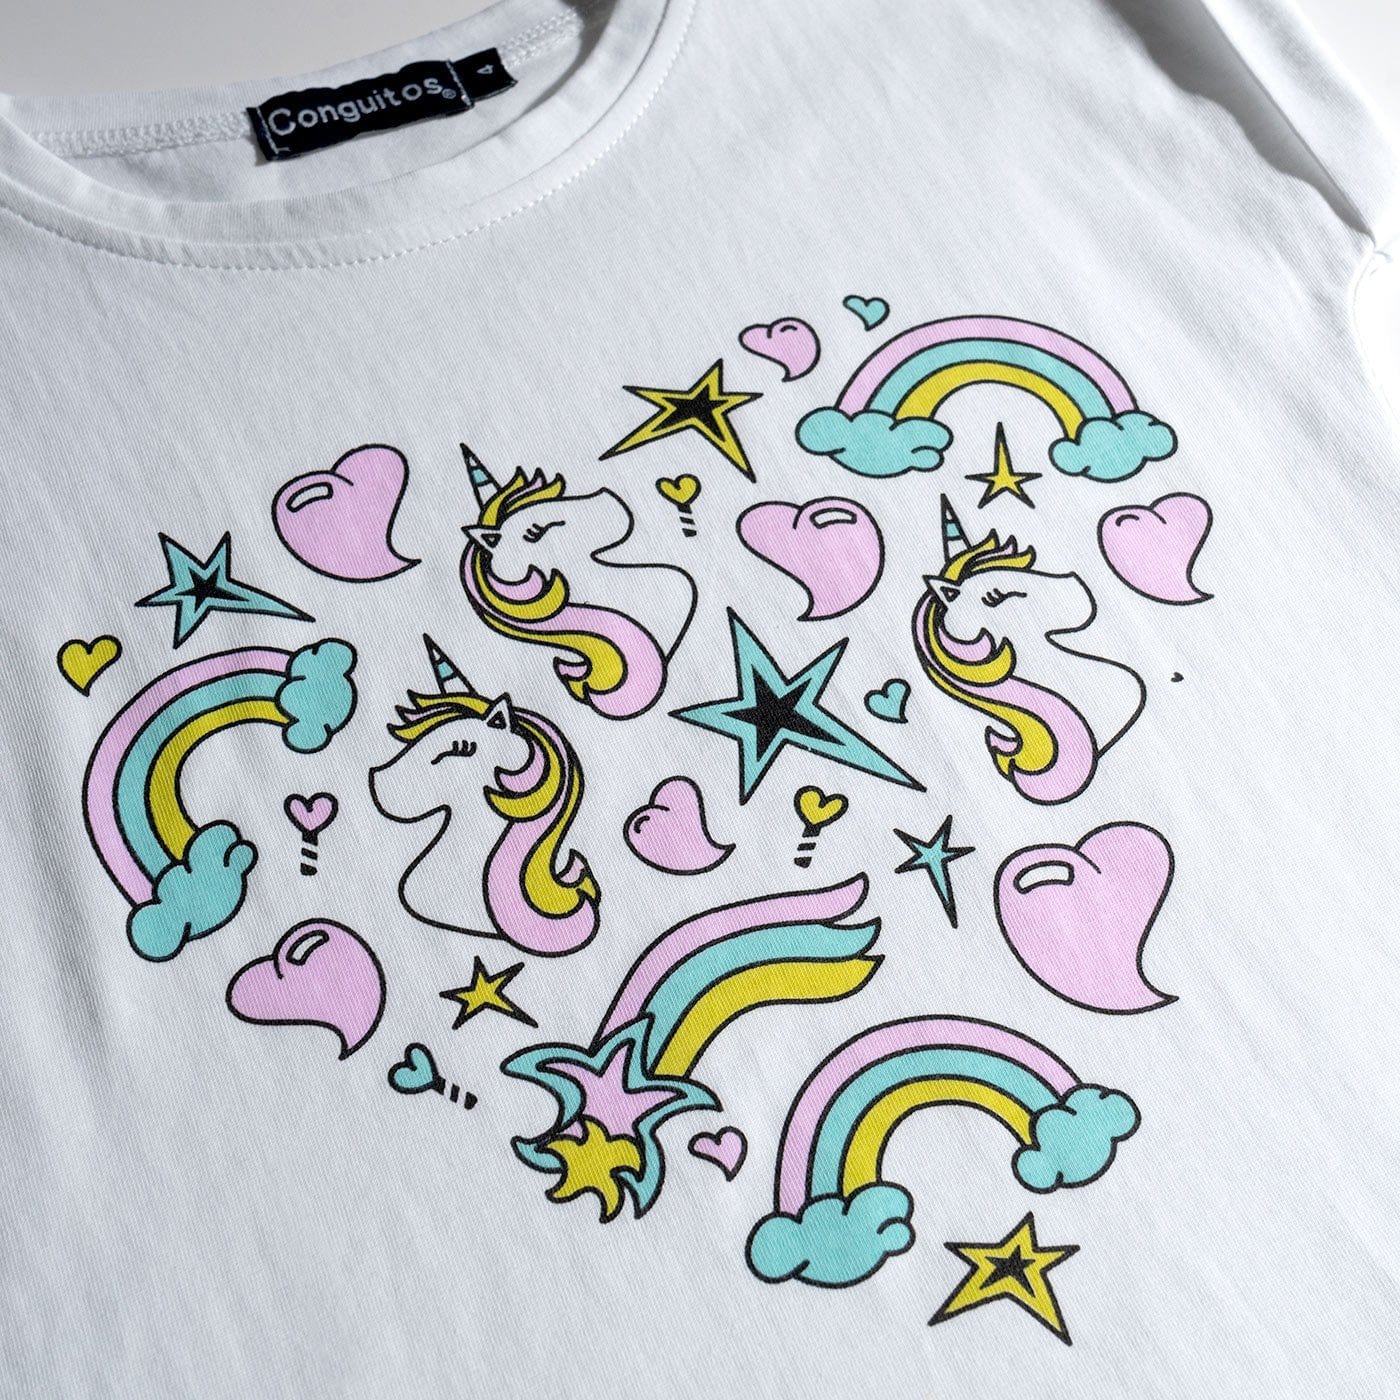 CONGUITOS TEXTIL Clothing Girl's Unicorn Hearts T-Shirt